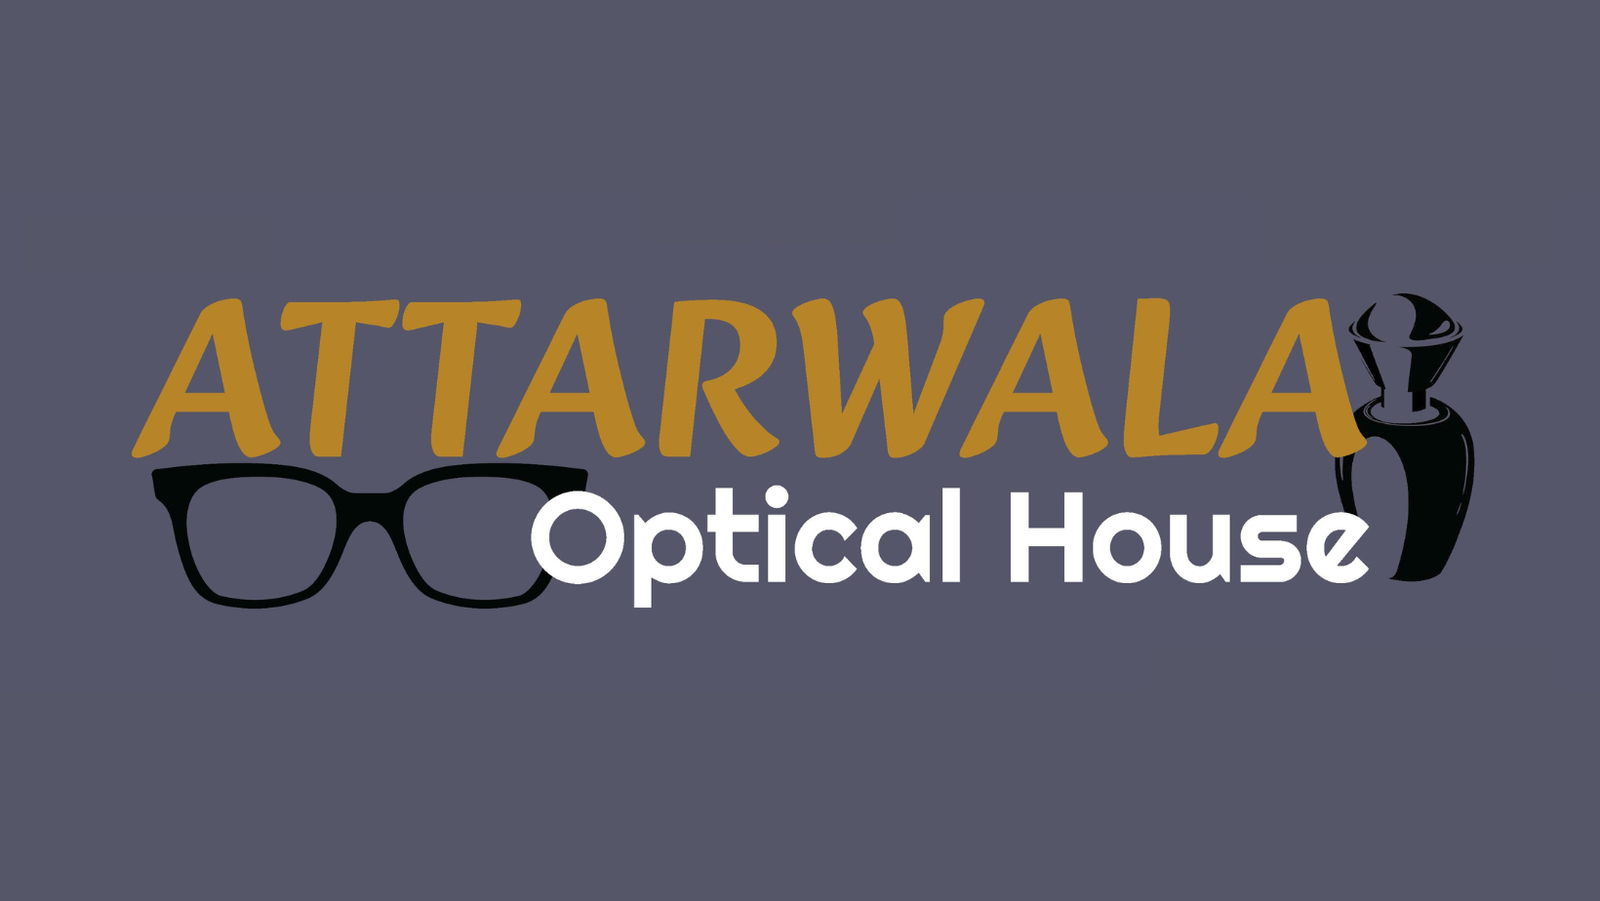 Attarwala Optical House